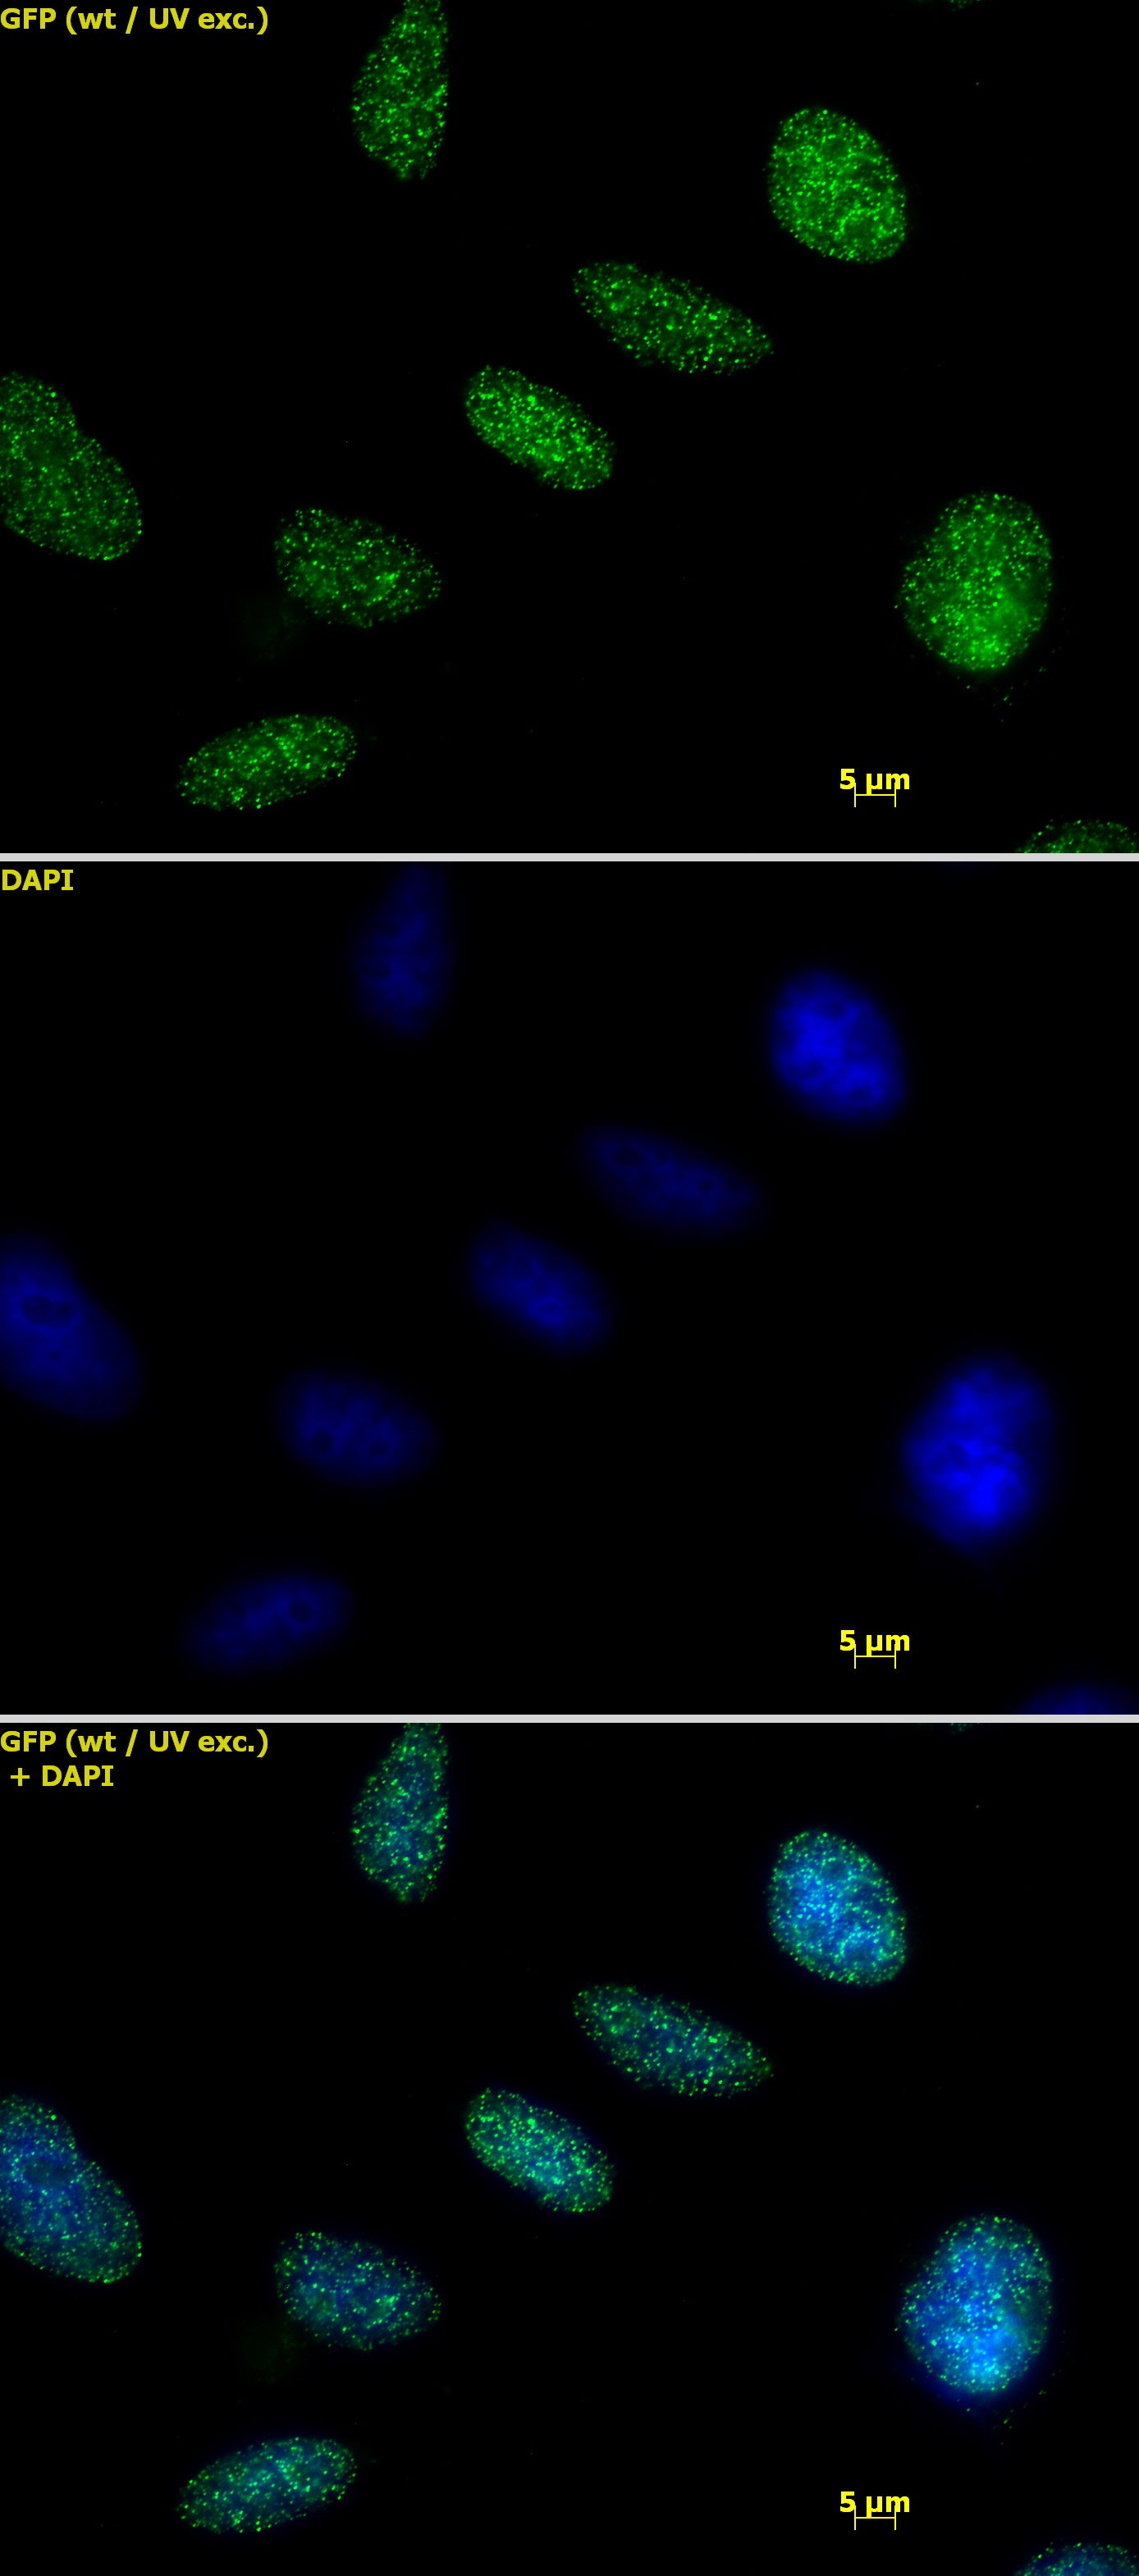 Histone H1 antibody (pAb), sample - MyBio Ireland - Active Motif